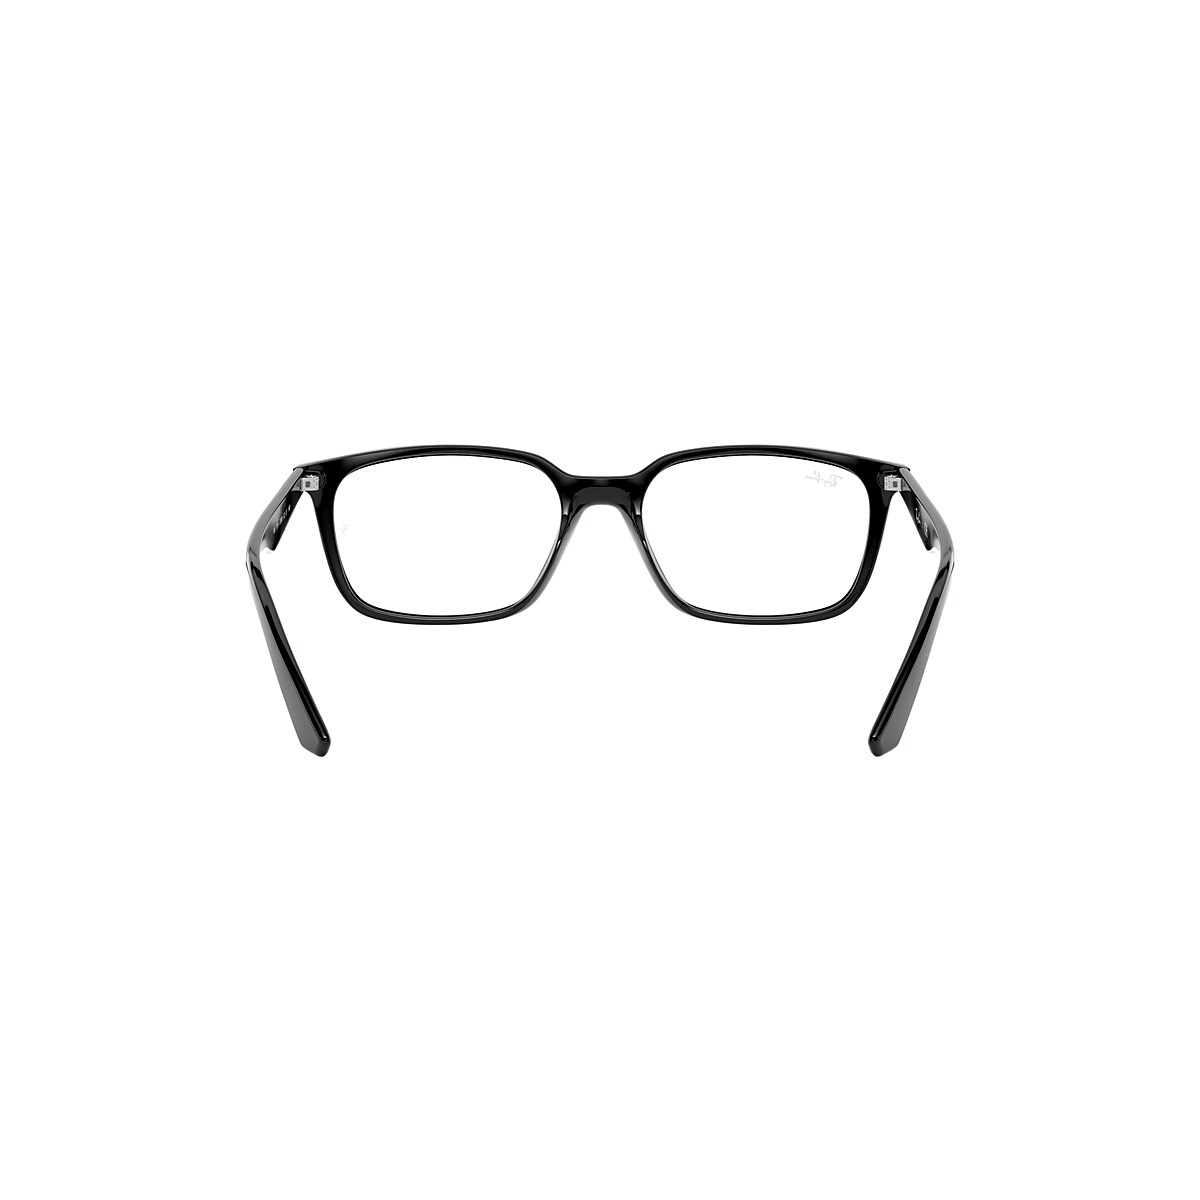 Rb7176 Optics Eyeglasses with Black Frame | Ray-Ban®